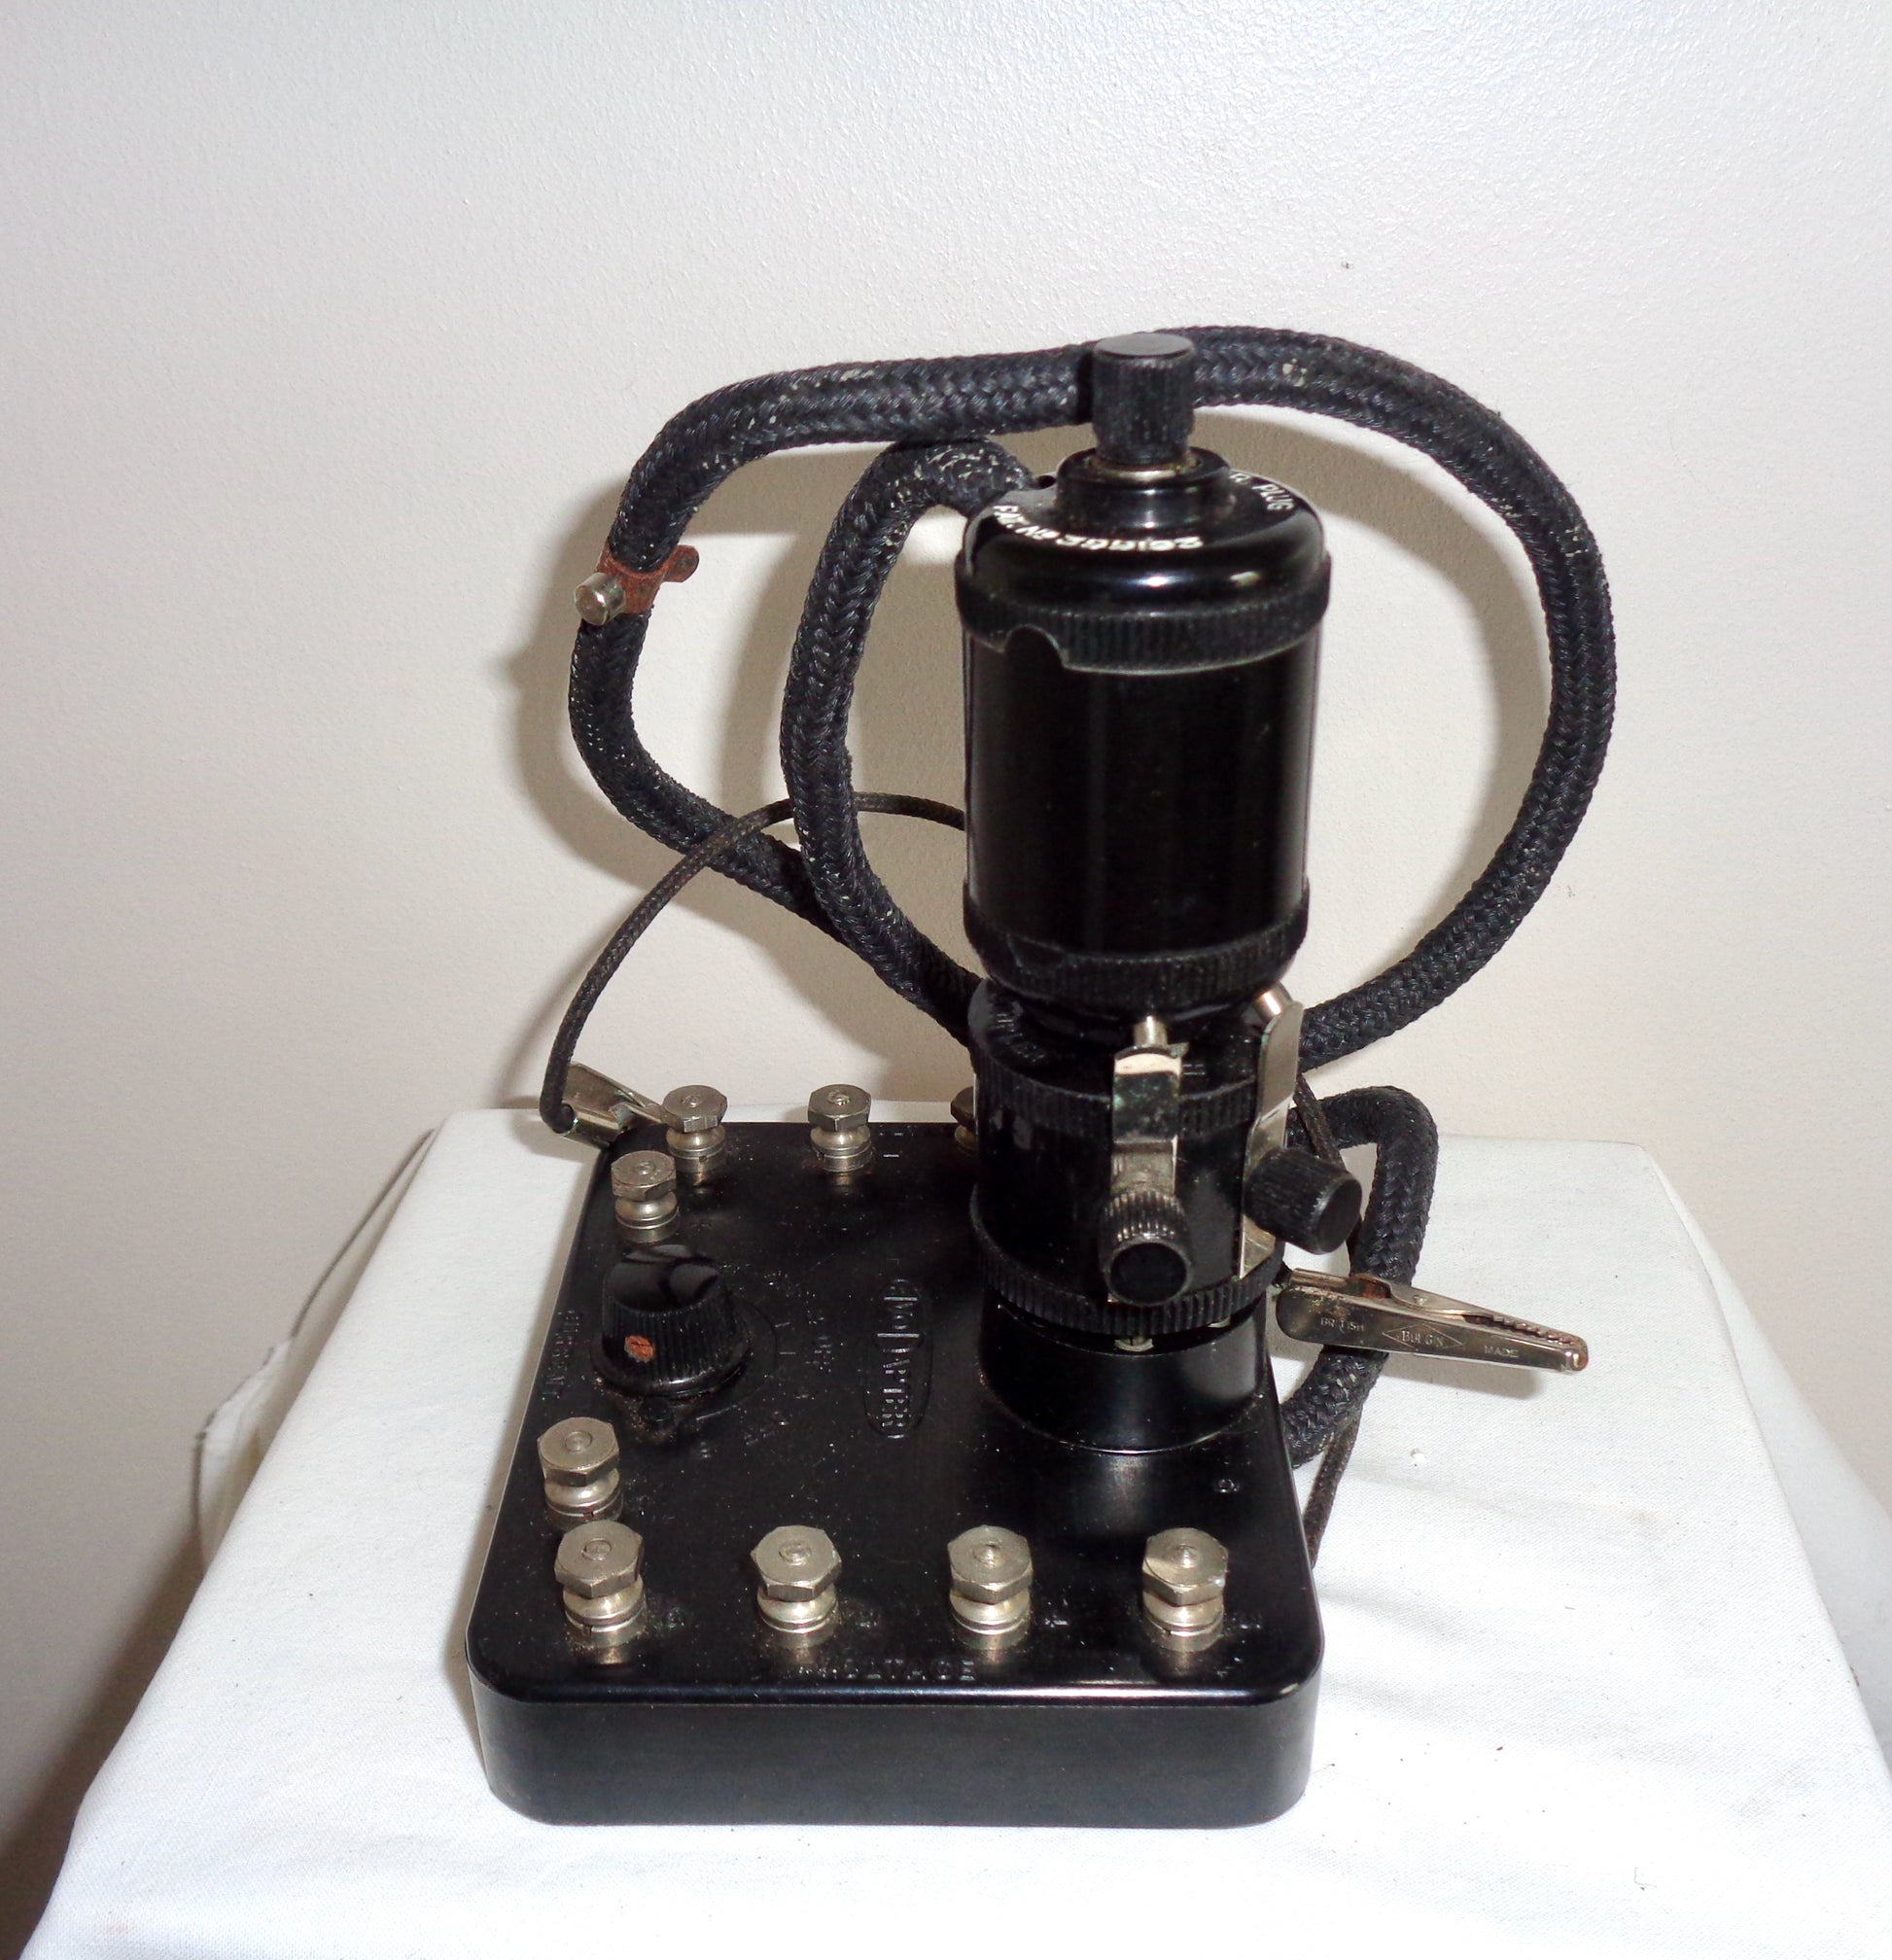 1930s AvoDapter Portable Tester For A Single Four / Five Or Seven Pin Valve With AvoCoupler